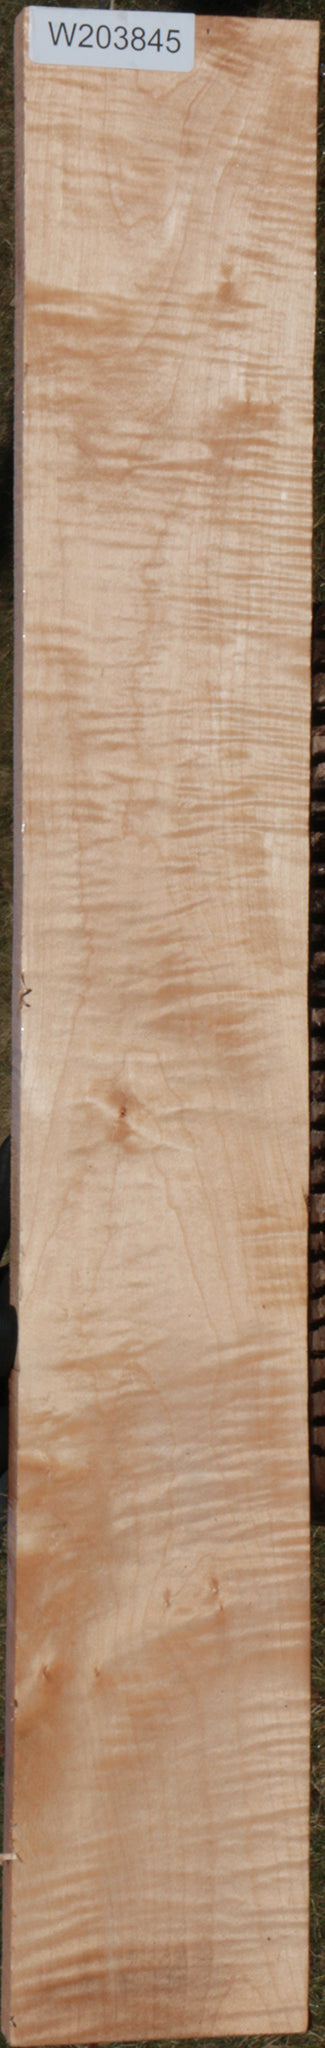 Extra Fancy Figured Eastern Hard Maple Lumber